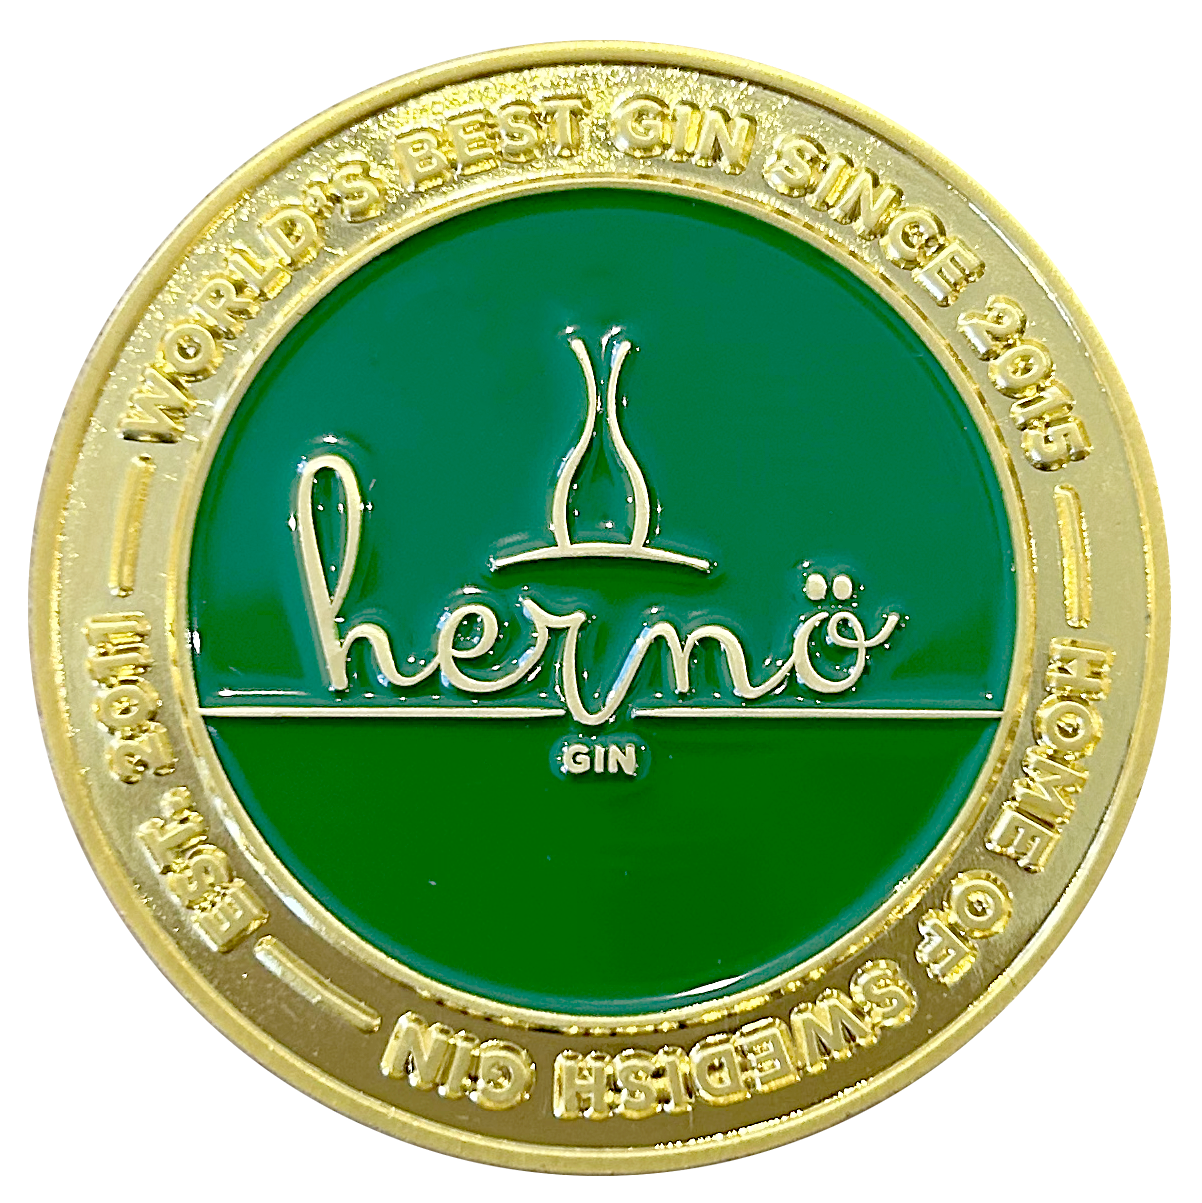 Hernö Gin Club Coin